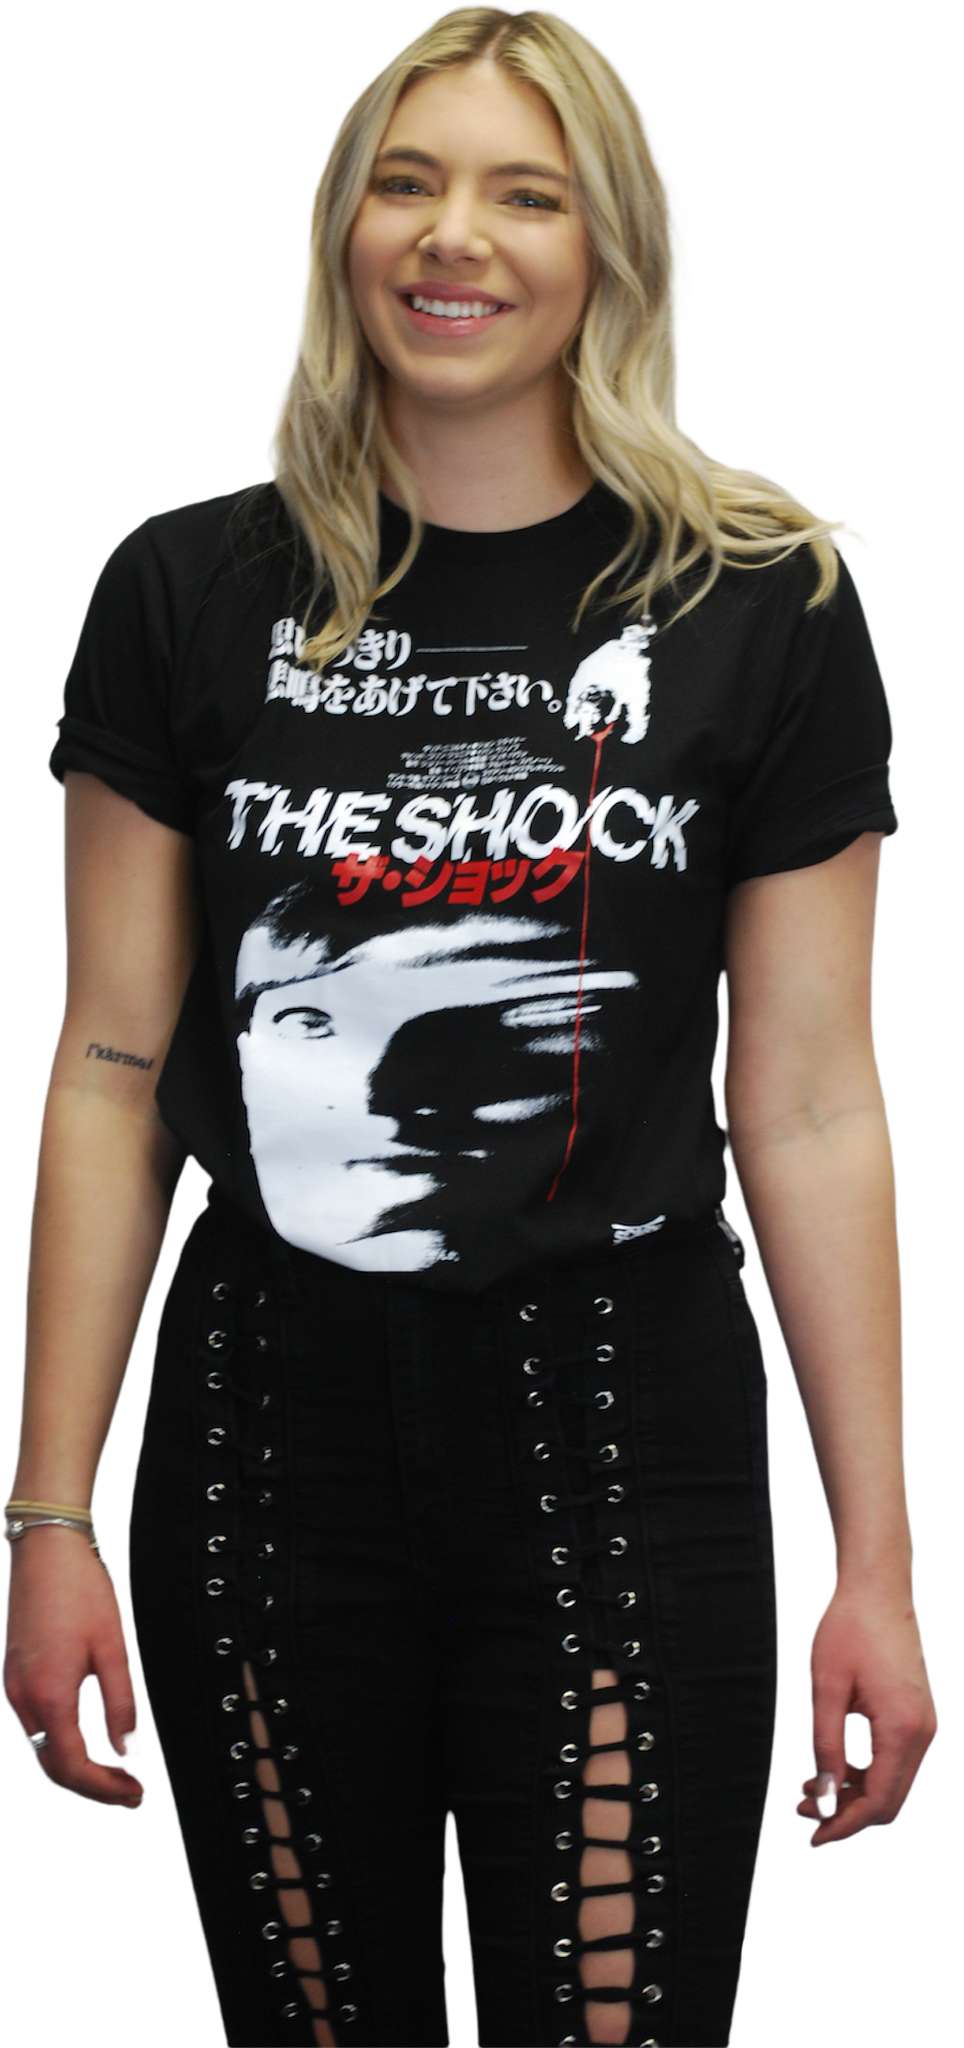 MARIO BAVA'S "THE SHOCK" JAPANESE POSTER T-SHIRT